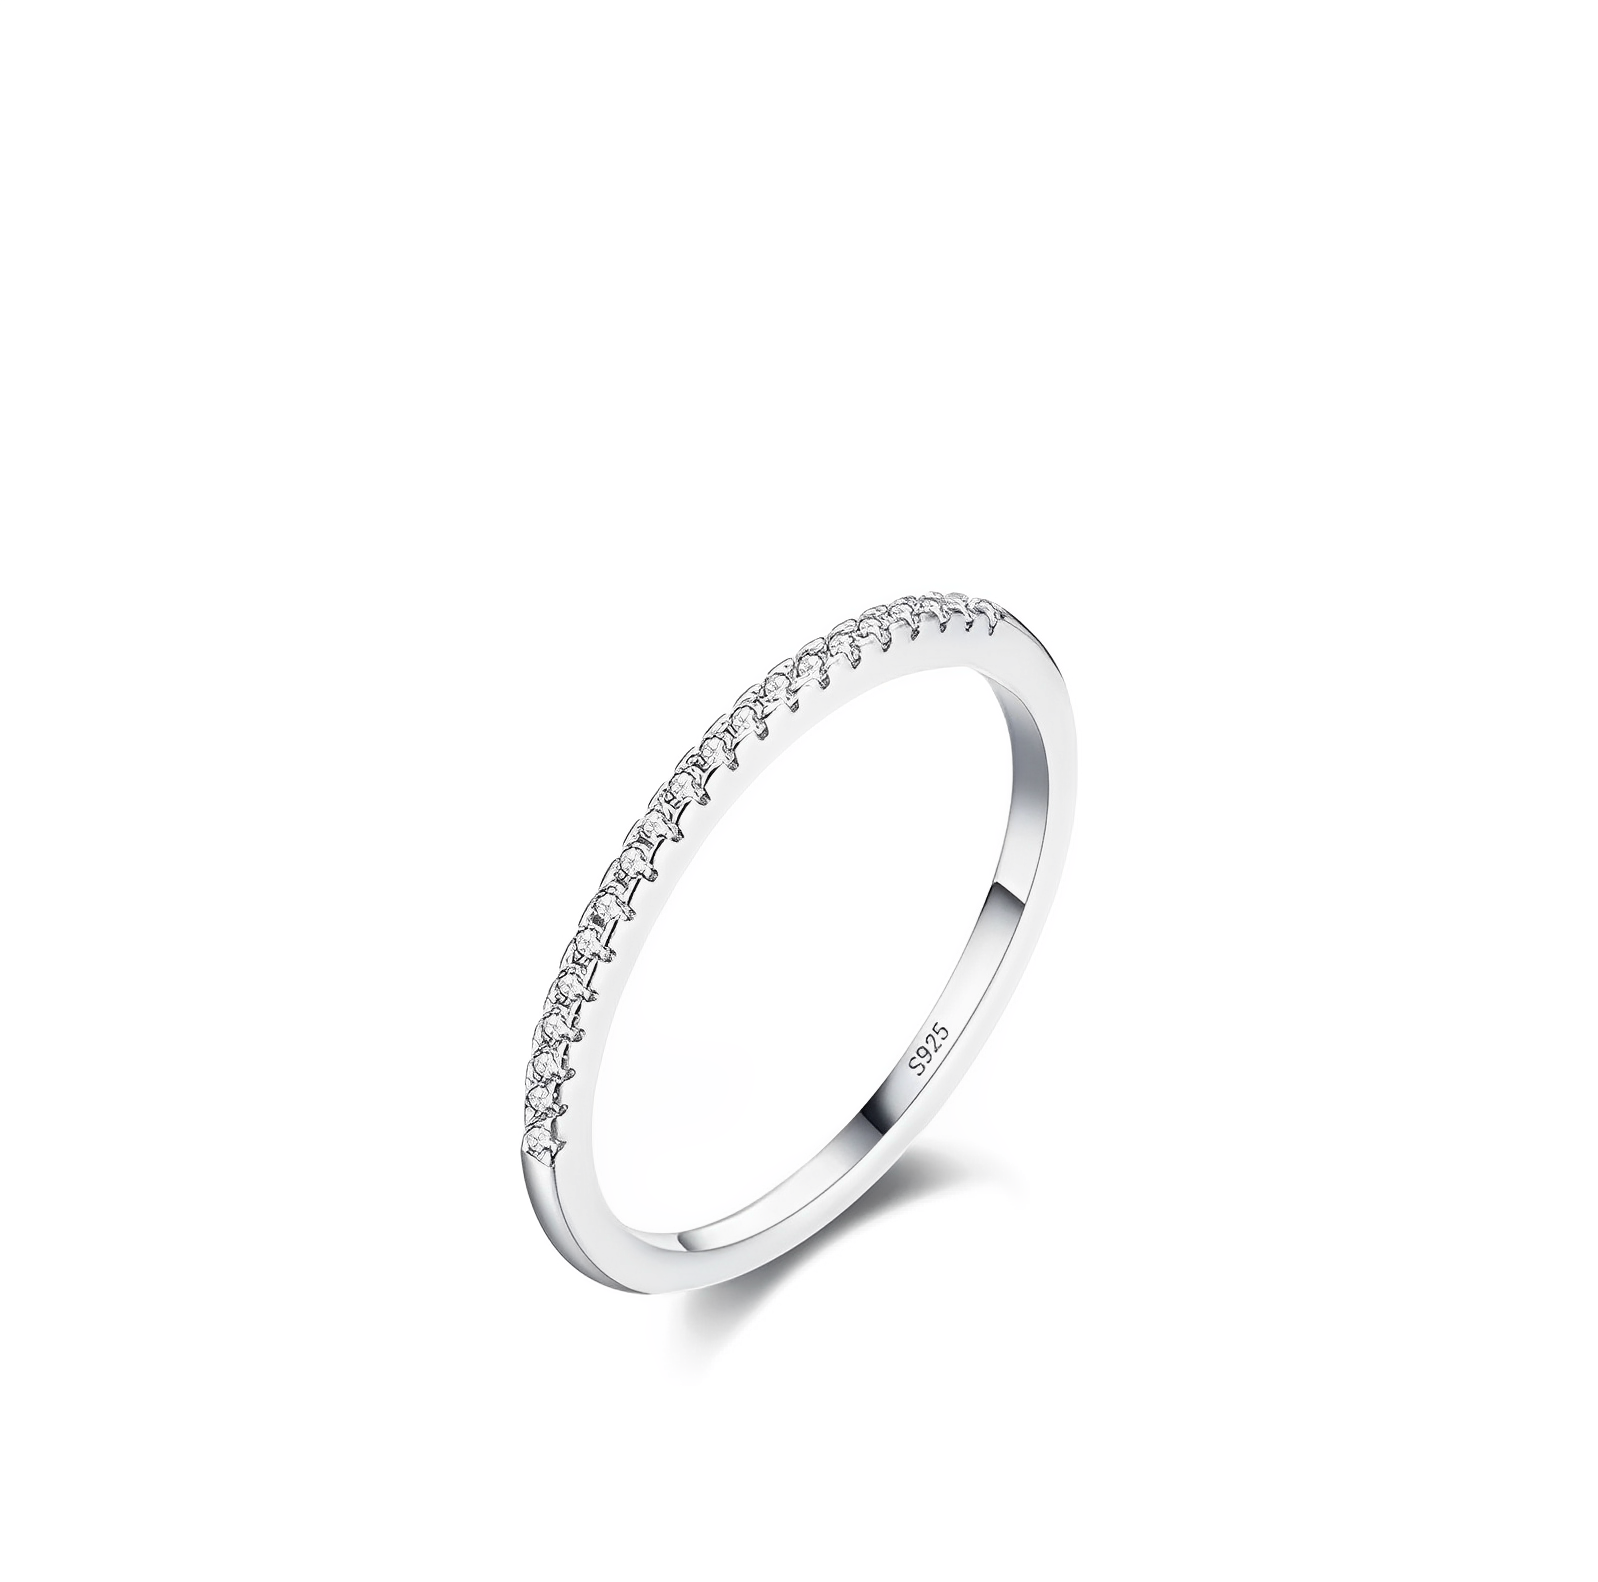 Tiffany Ring 925 Sterling Silver Van Vanora Jewelry 